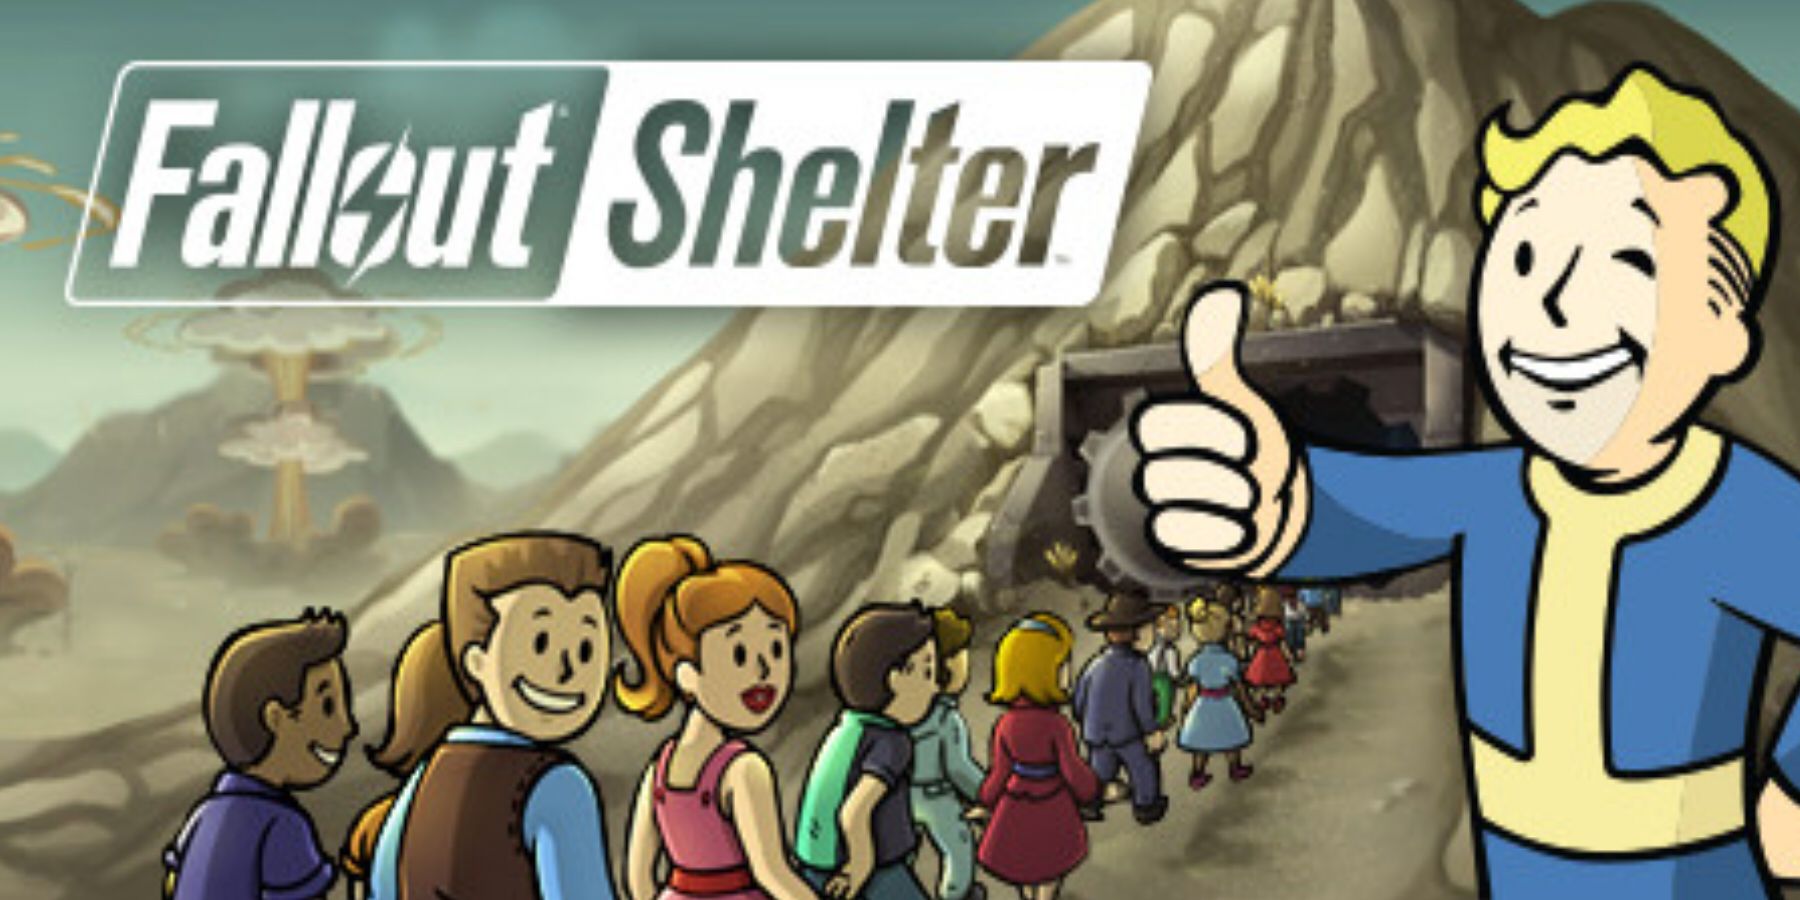 Fallout Shelter key art